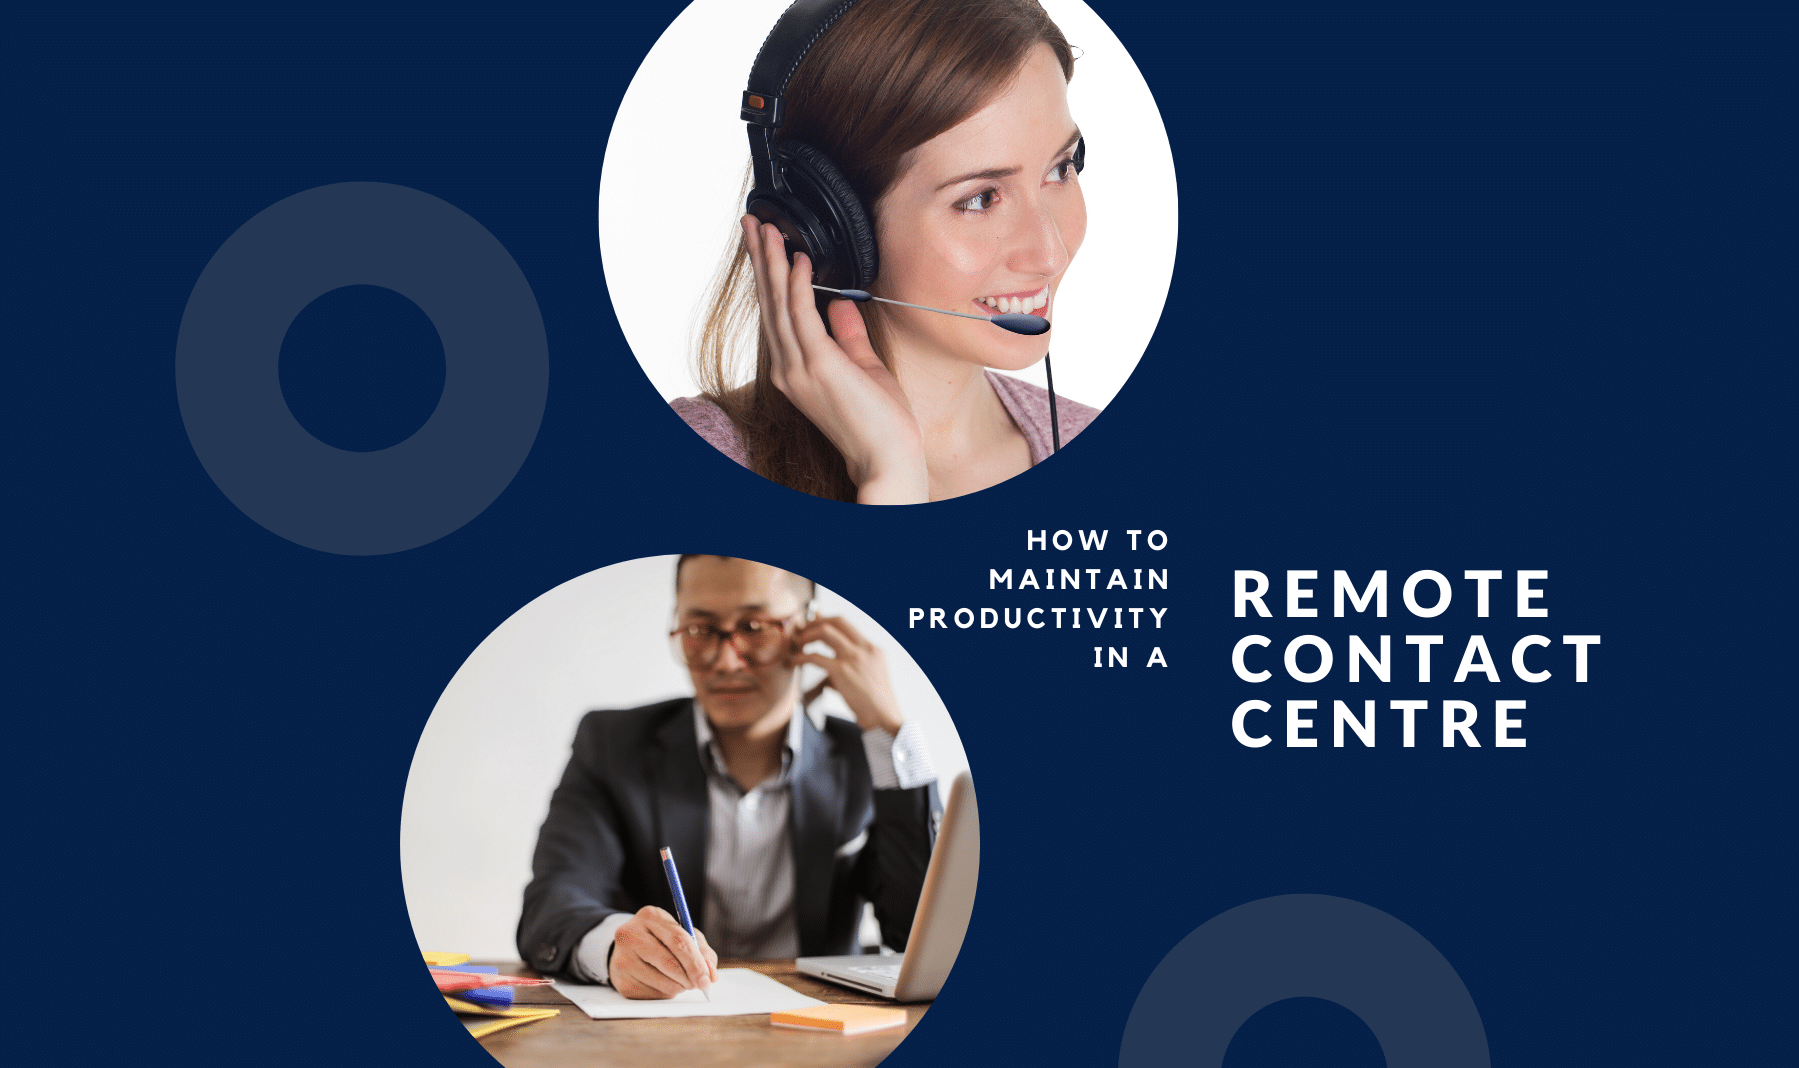 remote-contact-centre-productivity